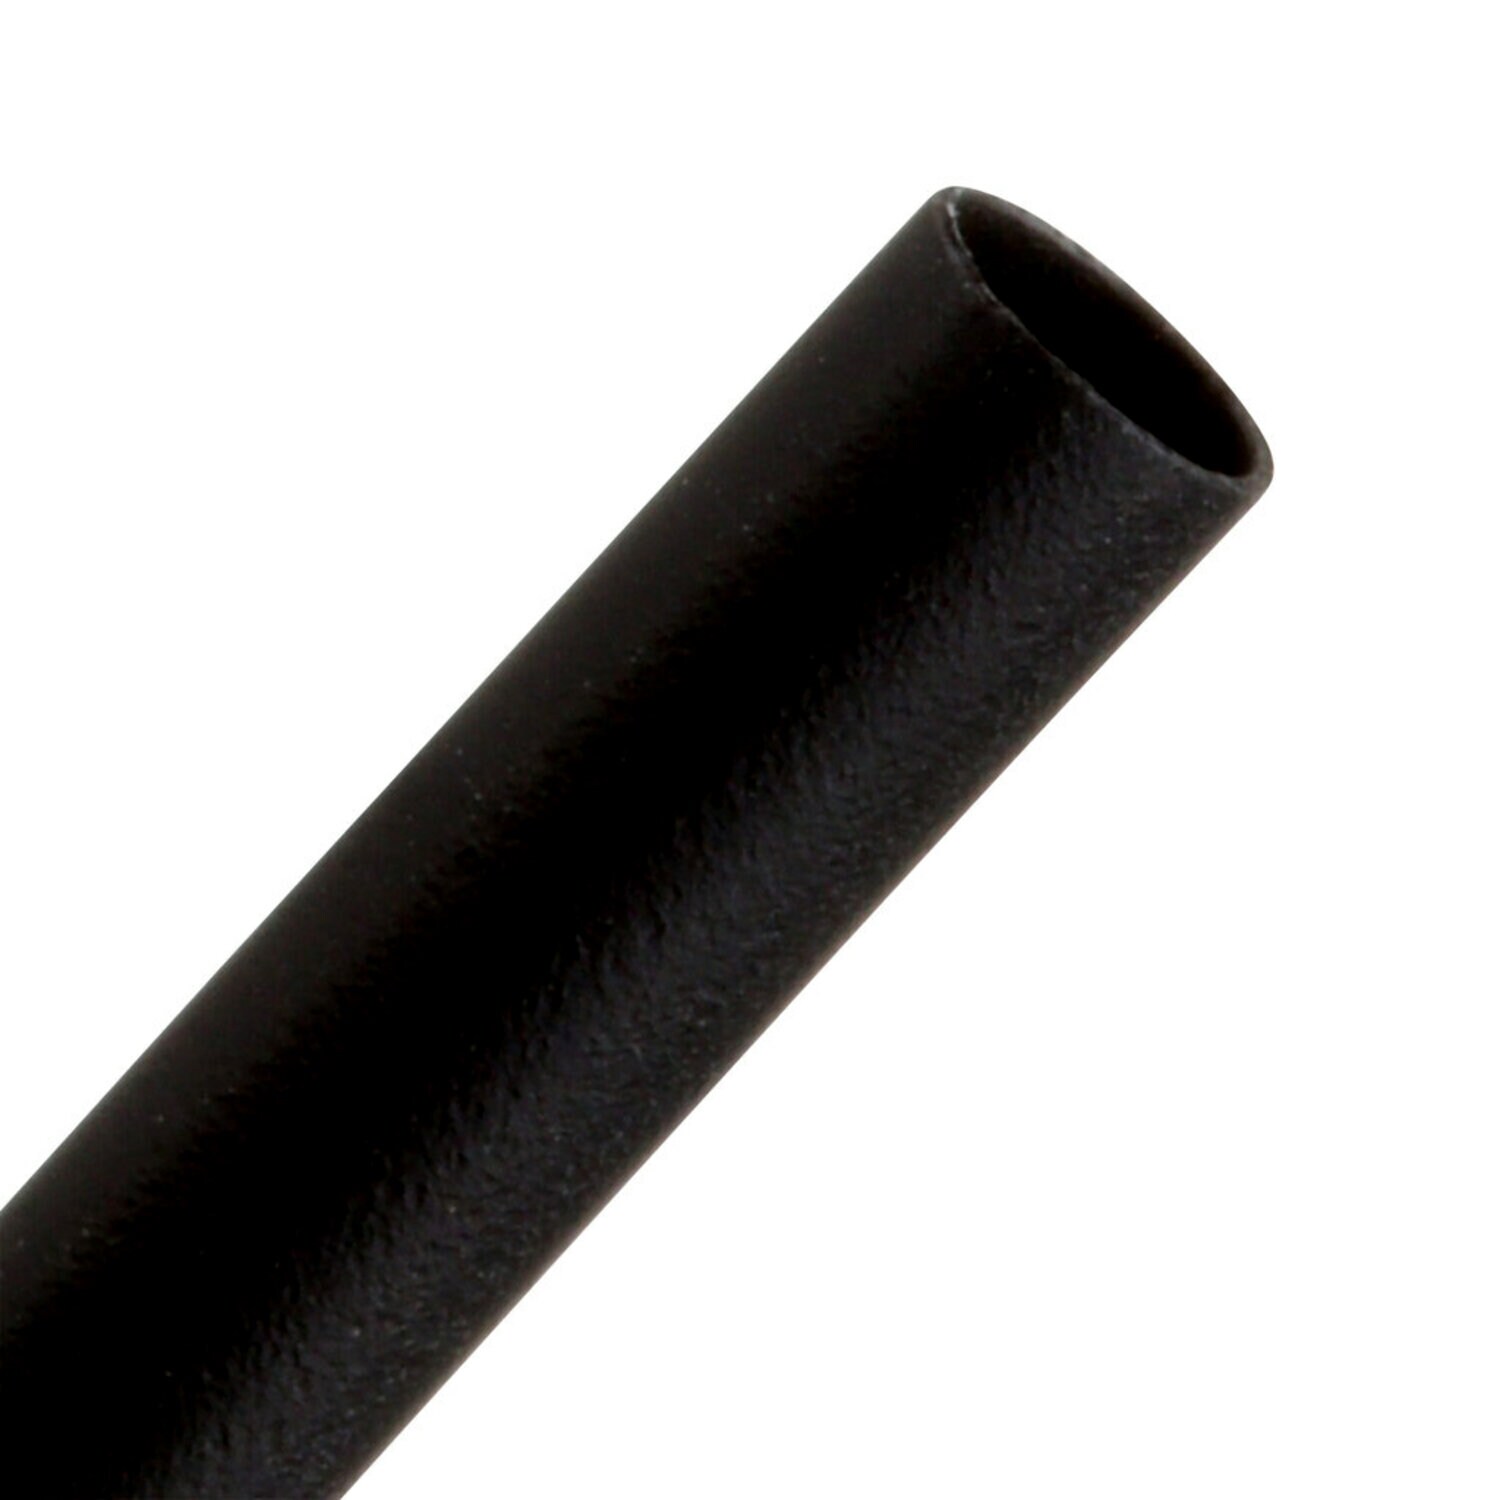 7100025139 - 3M Heat Shrink Thin-Wall Tubing FP-301-1/8-Black-500', 500 ft Length
per spool, 3 spools/case